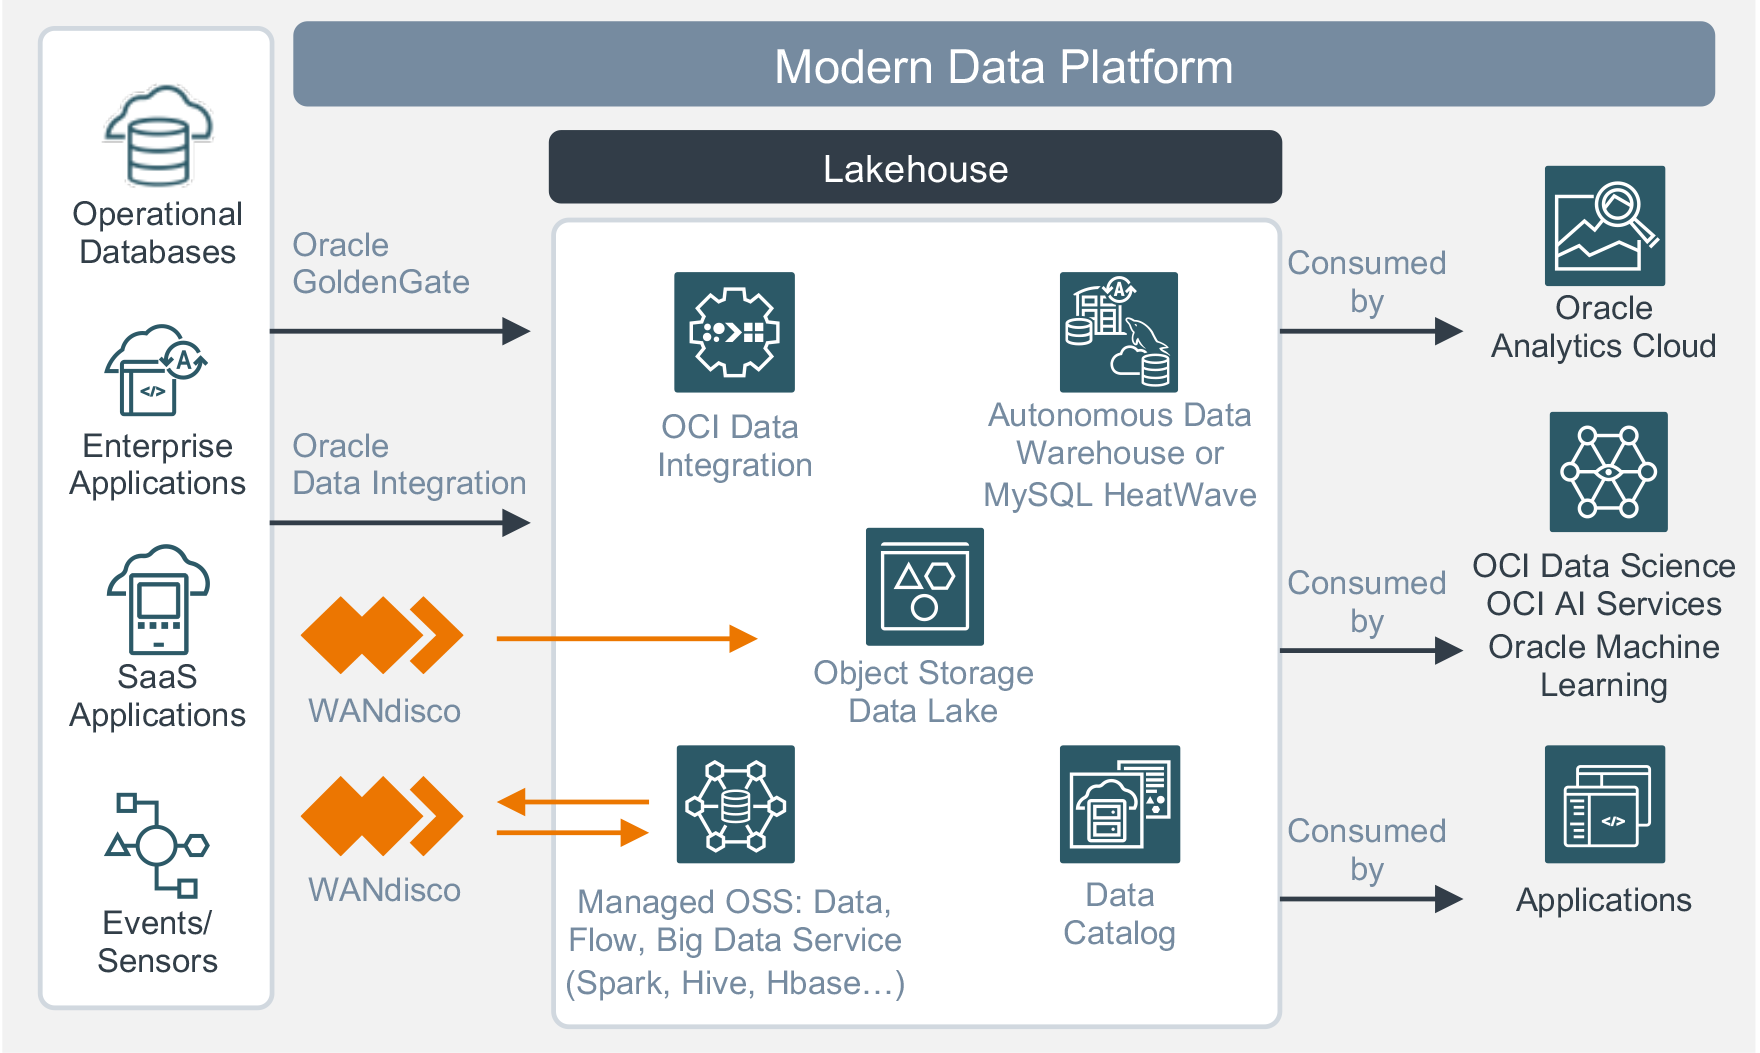 Modern Data Platform By Oracle